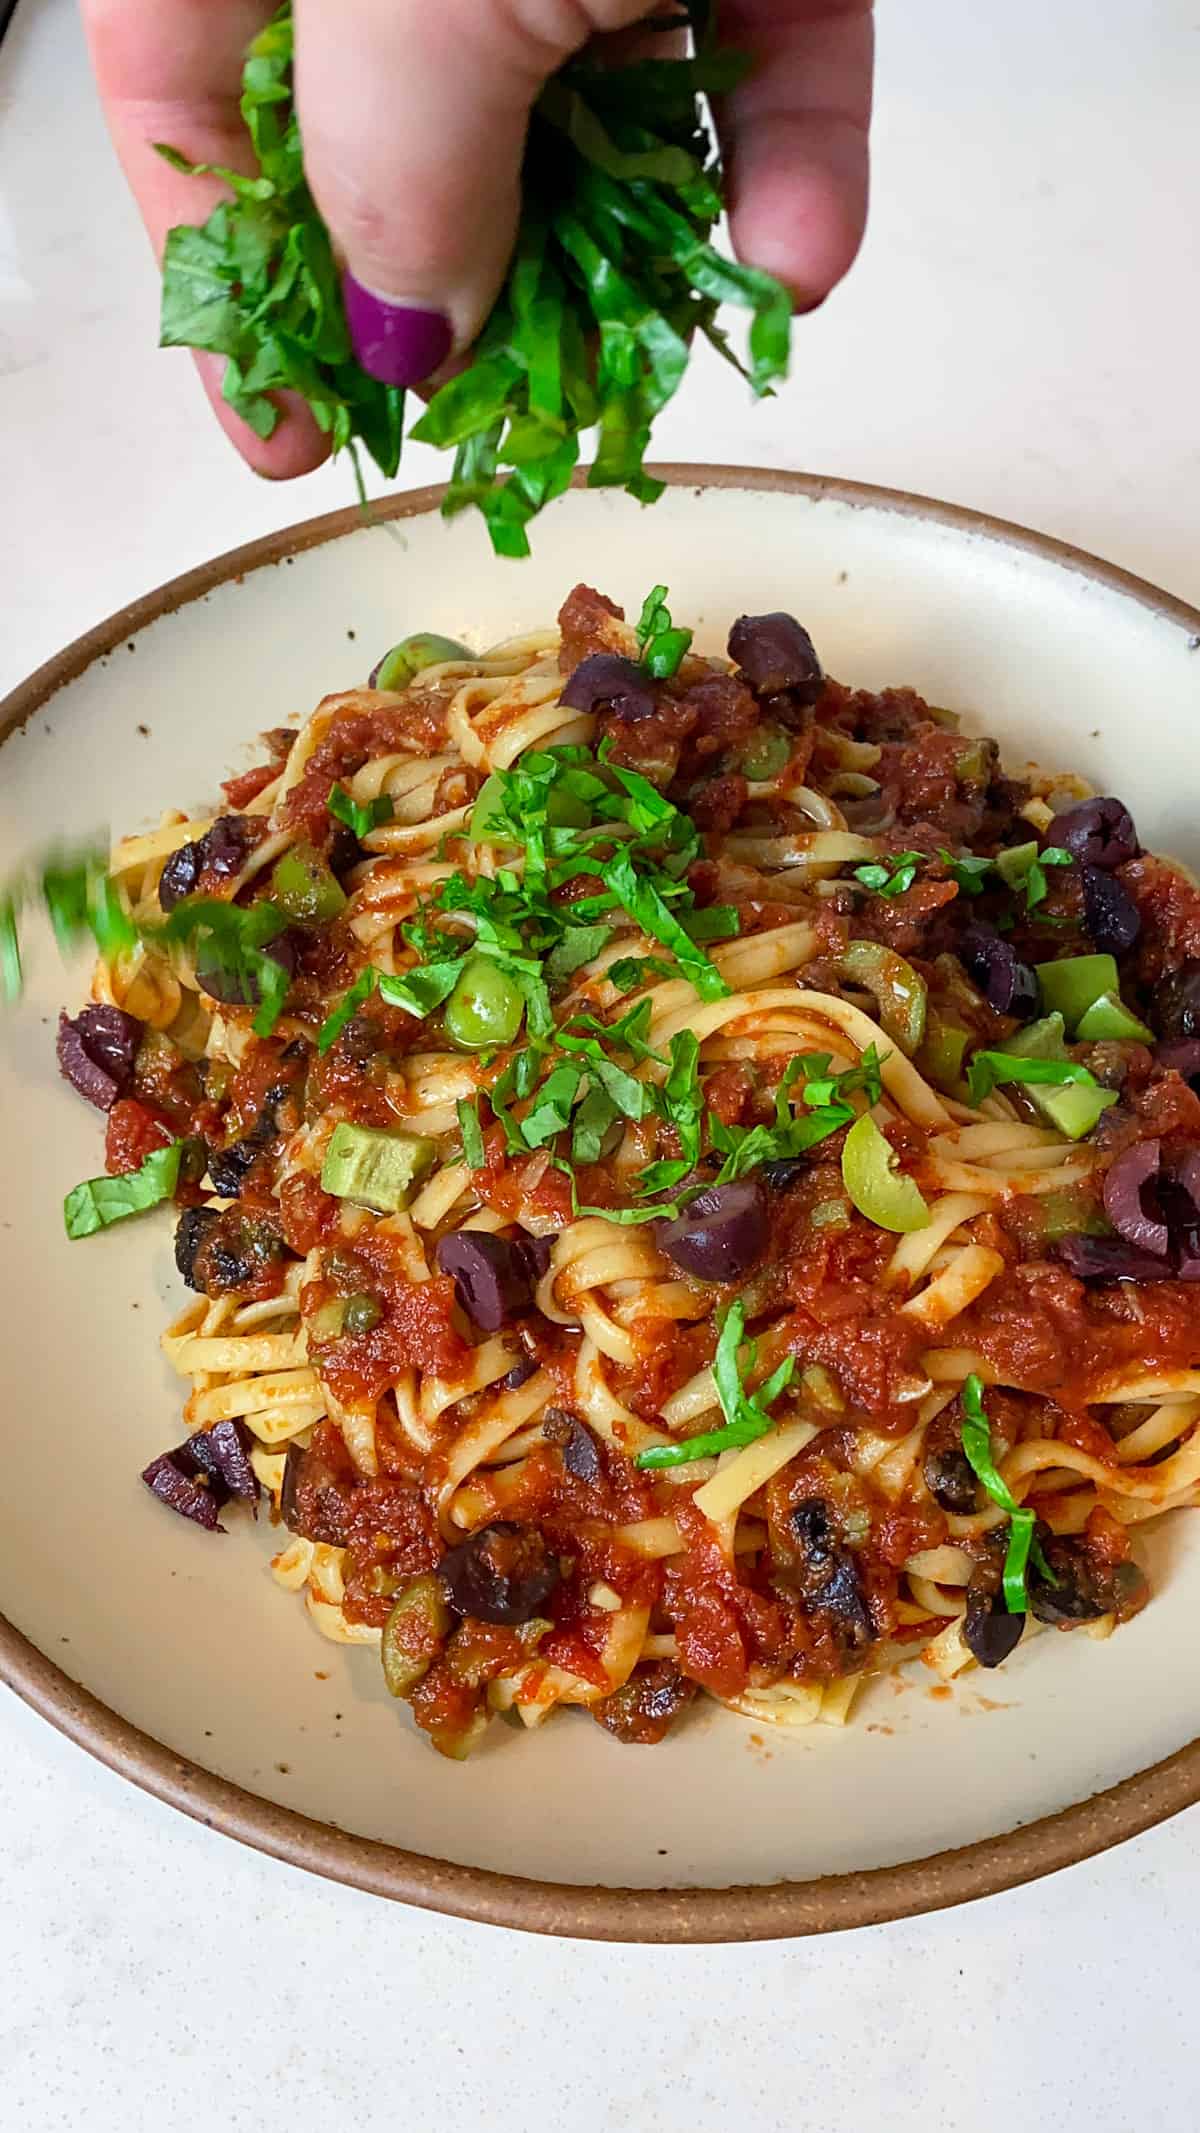 Garnish the puttanesca pasta with fresh basil.